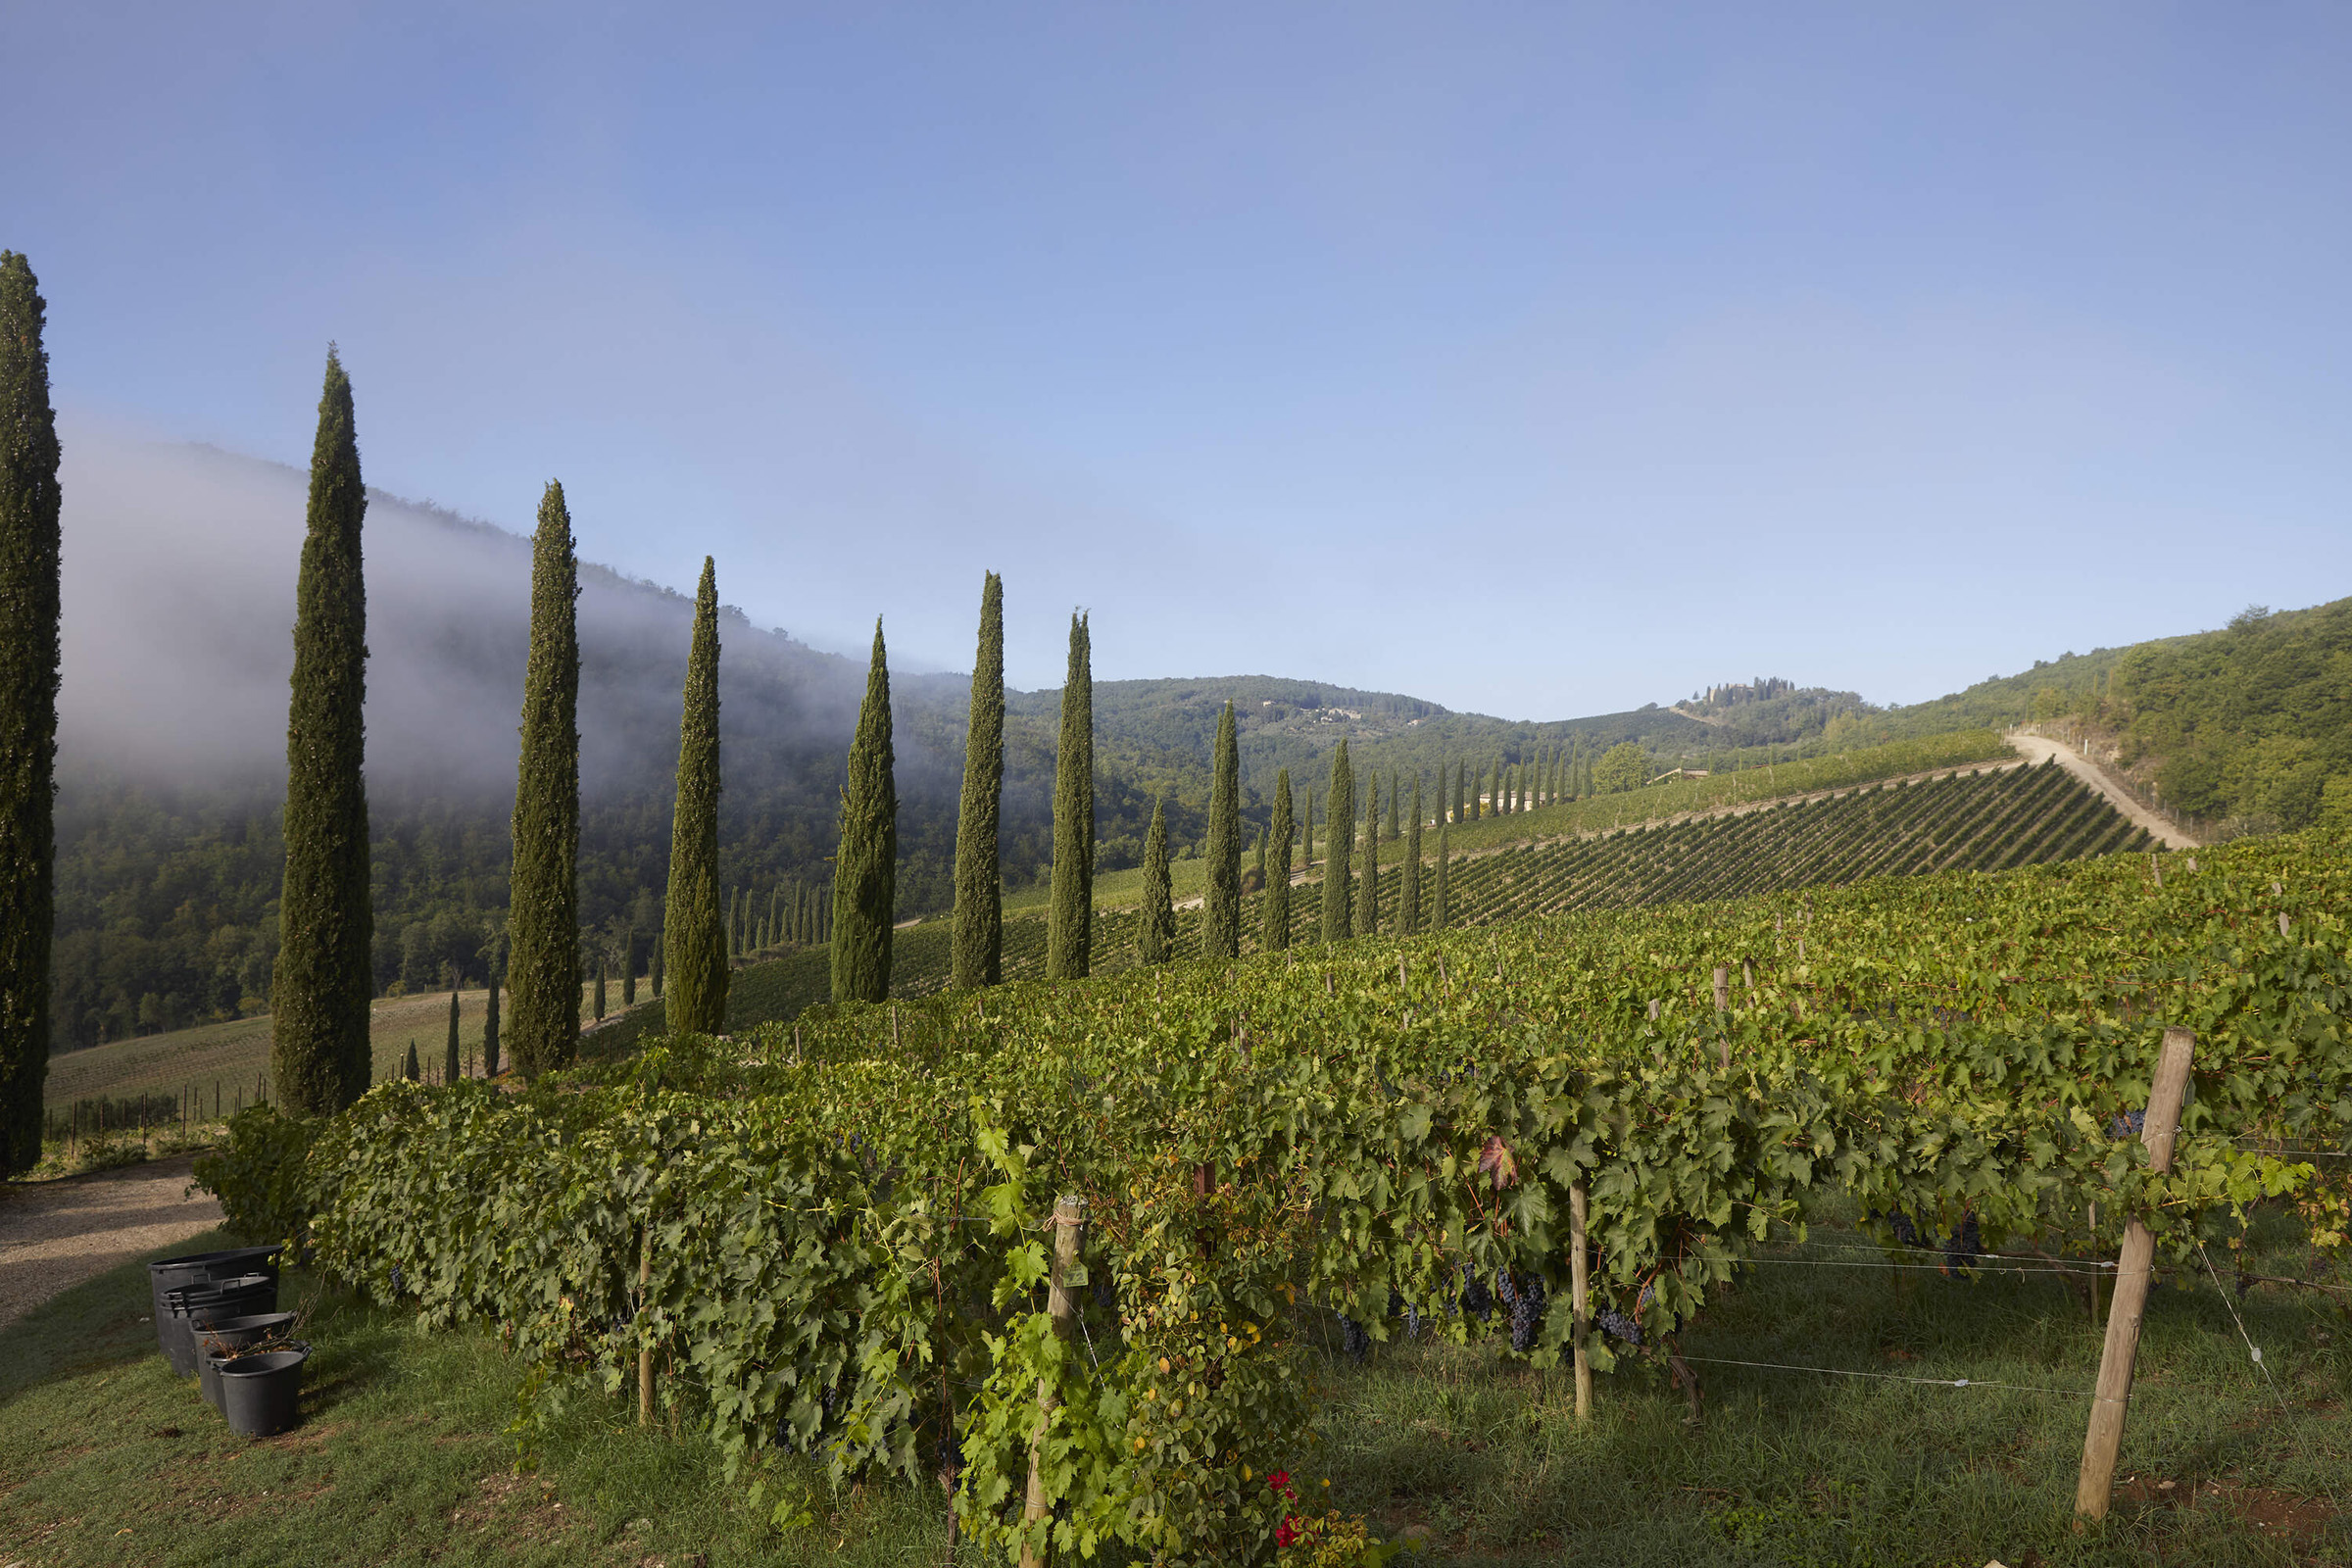 Hillside vineyards in Tuscany.